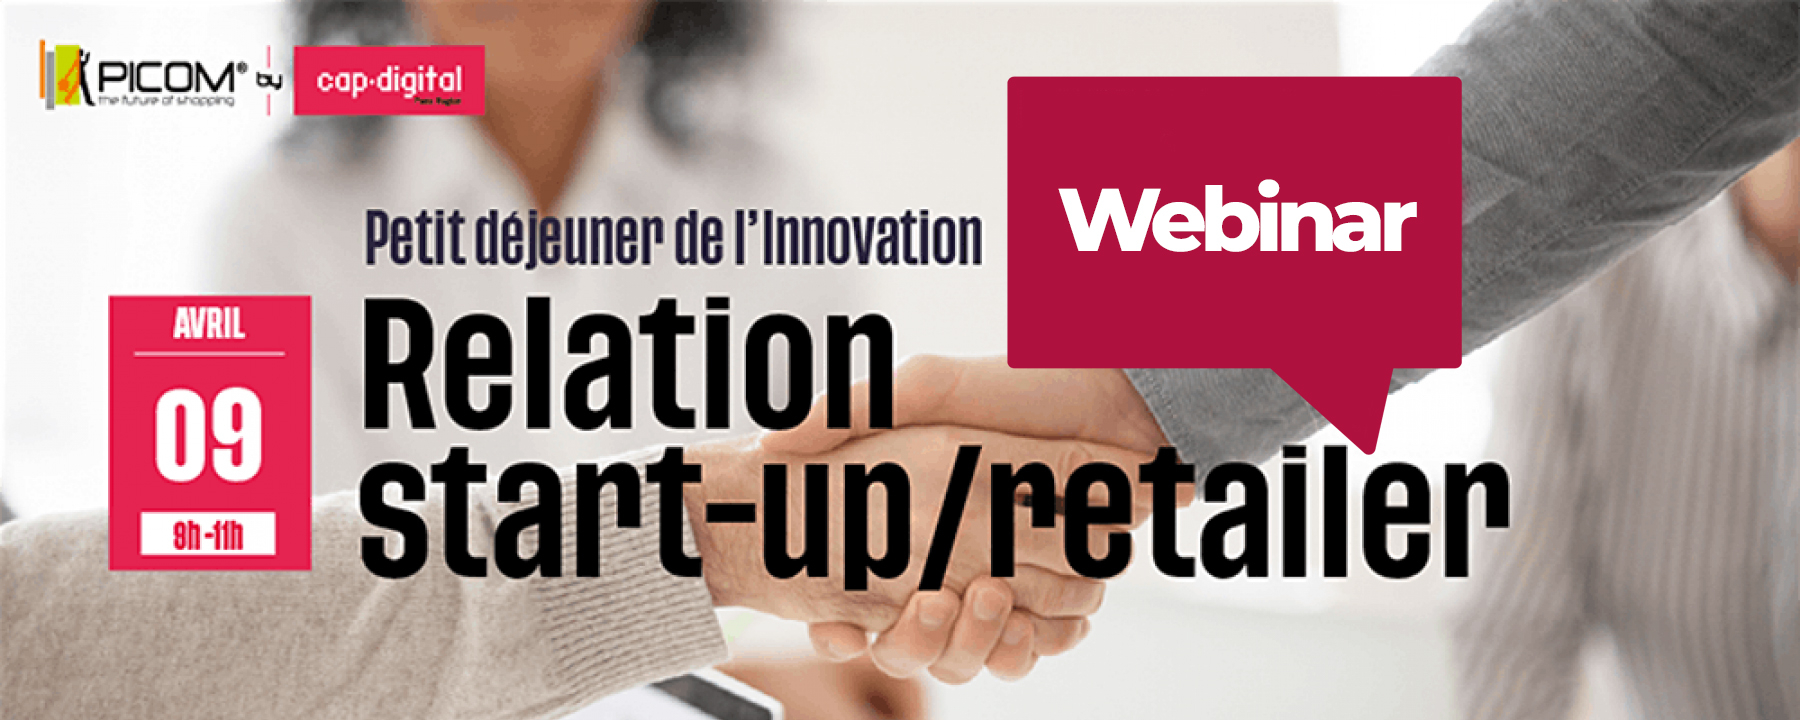 Petit-déjeuner Relation start-up/retailer, organisé par PICOM, webinar